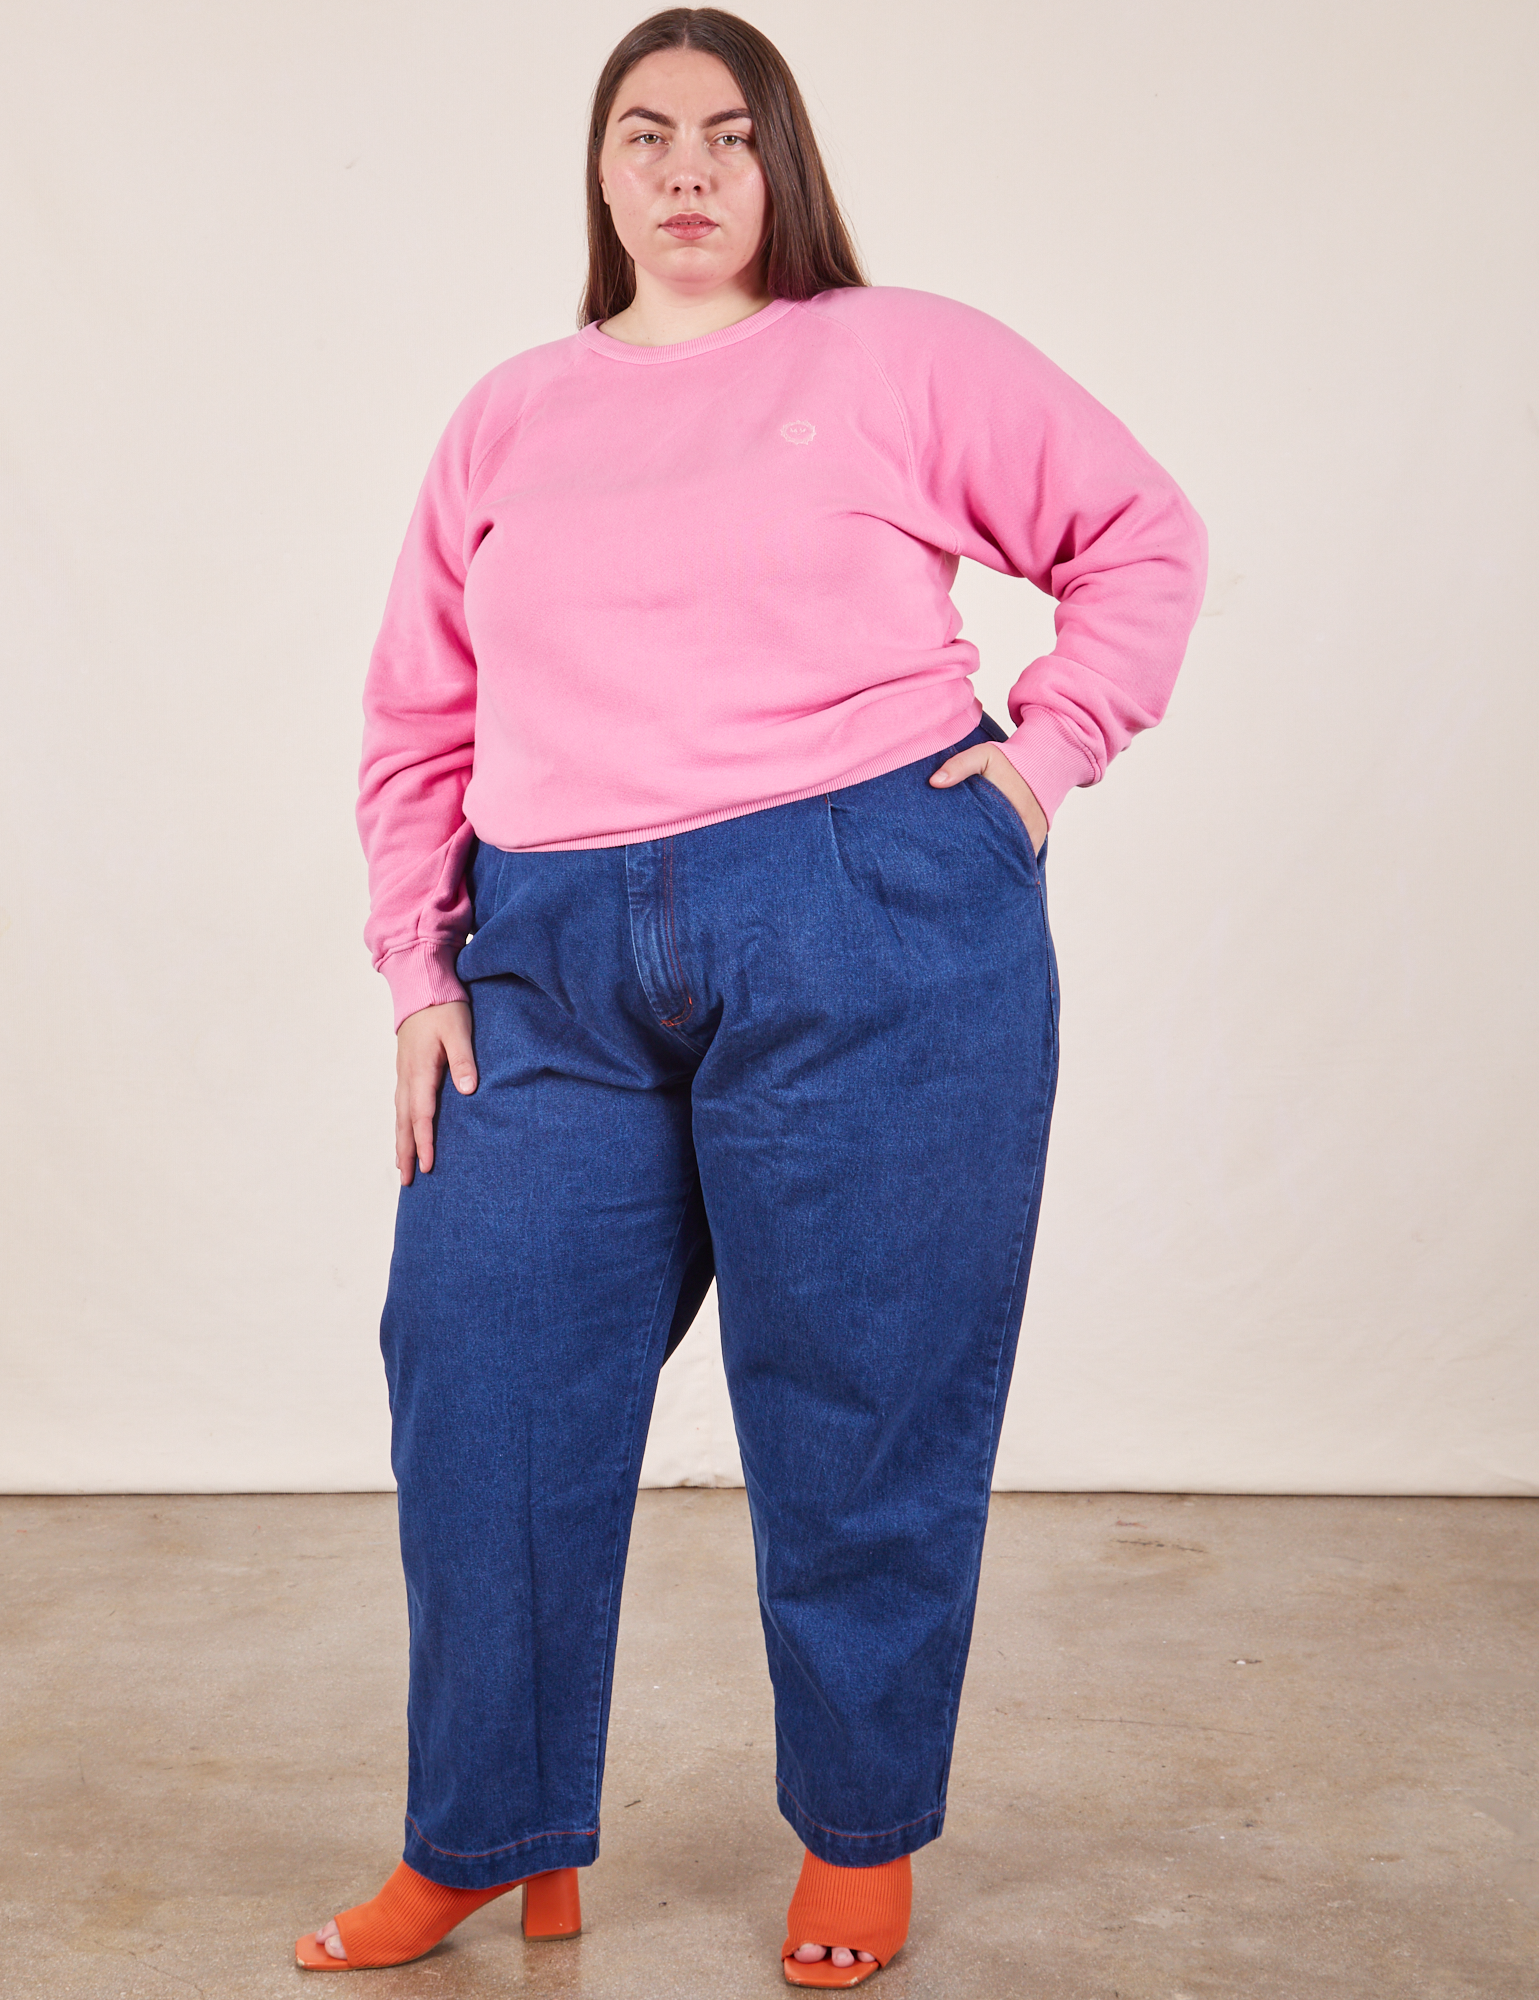 Marielena is wearing Heavyweight Crew in Bubblegum Pink paired with dark wash Denim Trouser Jeans